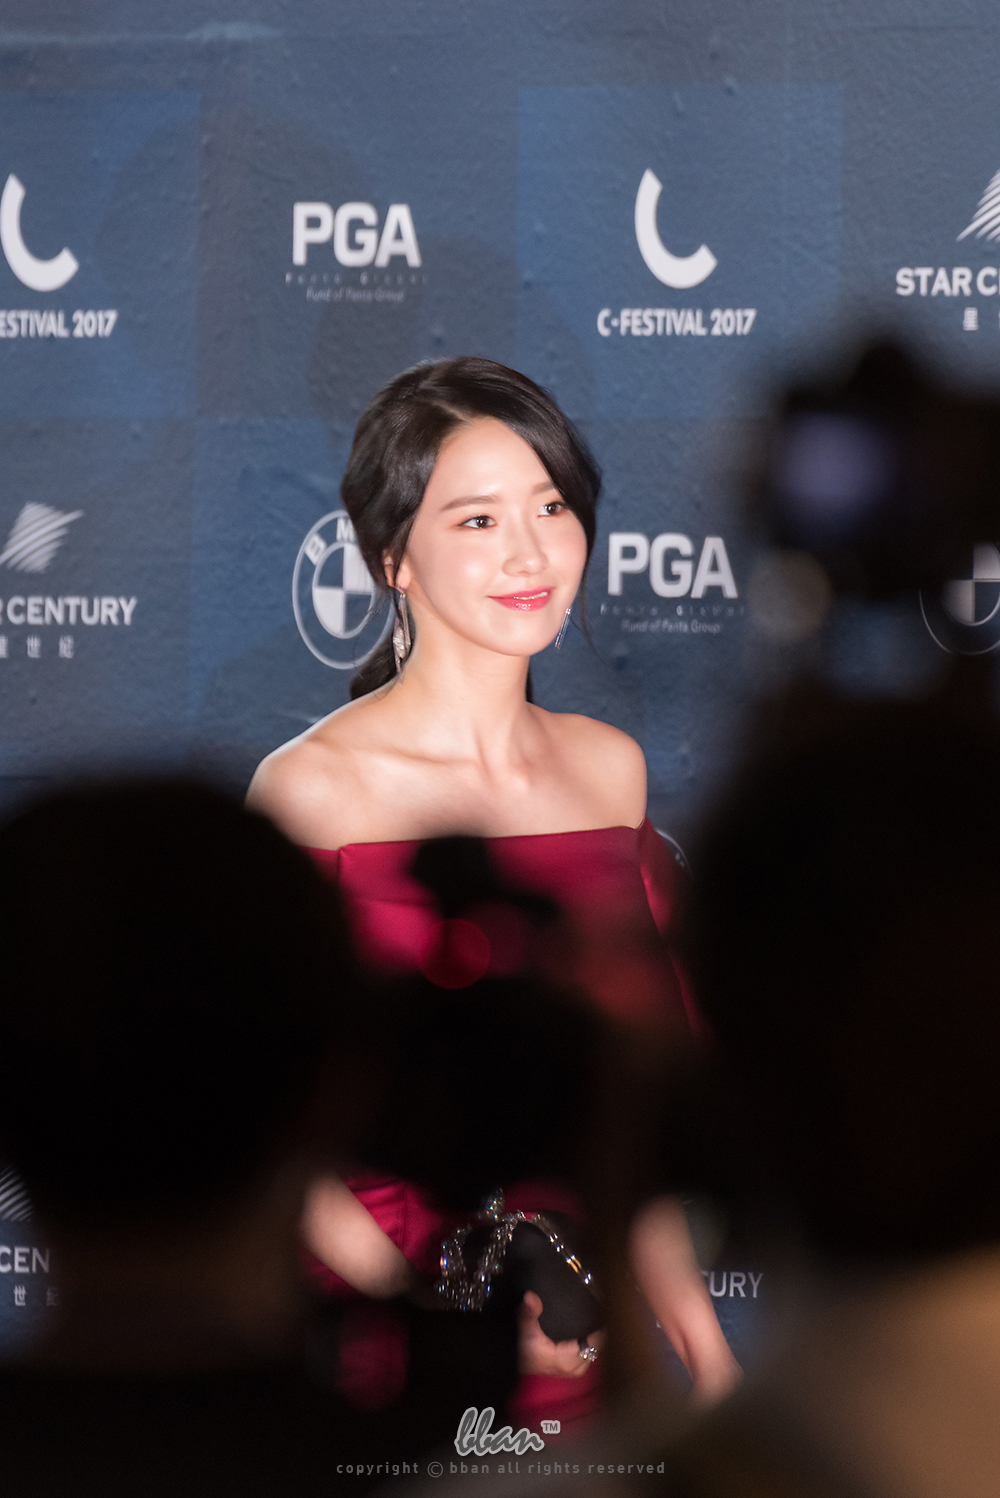 [PIC][03-05-2017]YoonA tham dự "53rd Baeksang Arts Awards" vào chiều nay + Giành "Most Popular Actress or Star Century Popularity Award (in Film)" - Page 2 211F9347590D5289306067